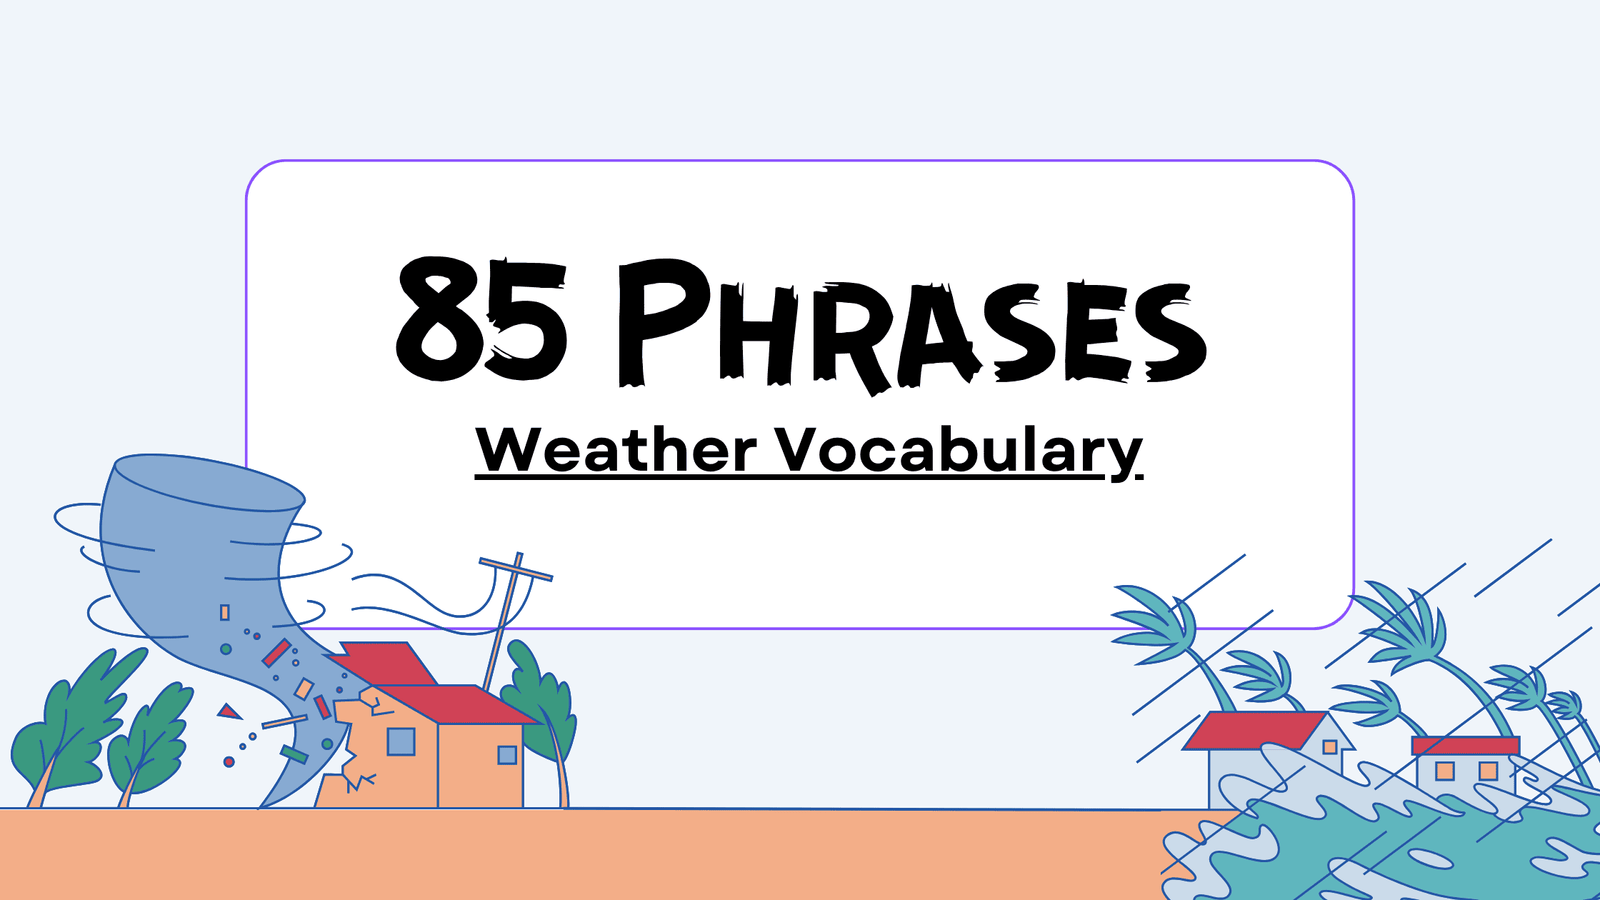 Weather Vocab, Weather Vocabulary, Phrases